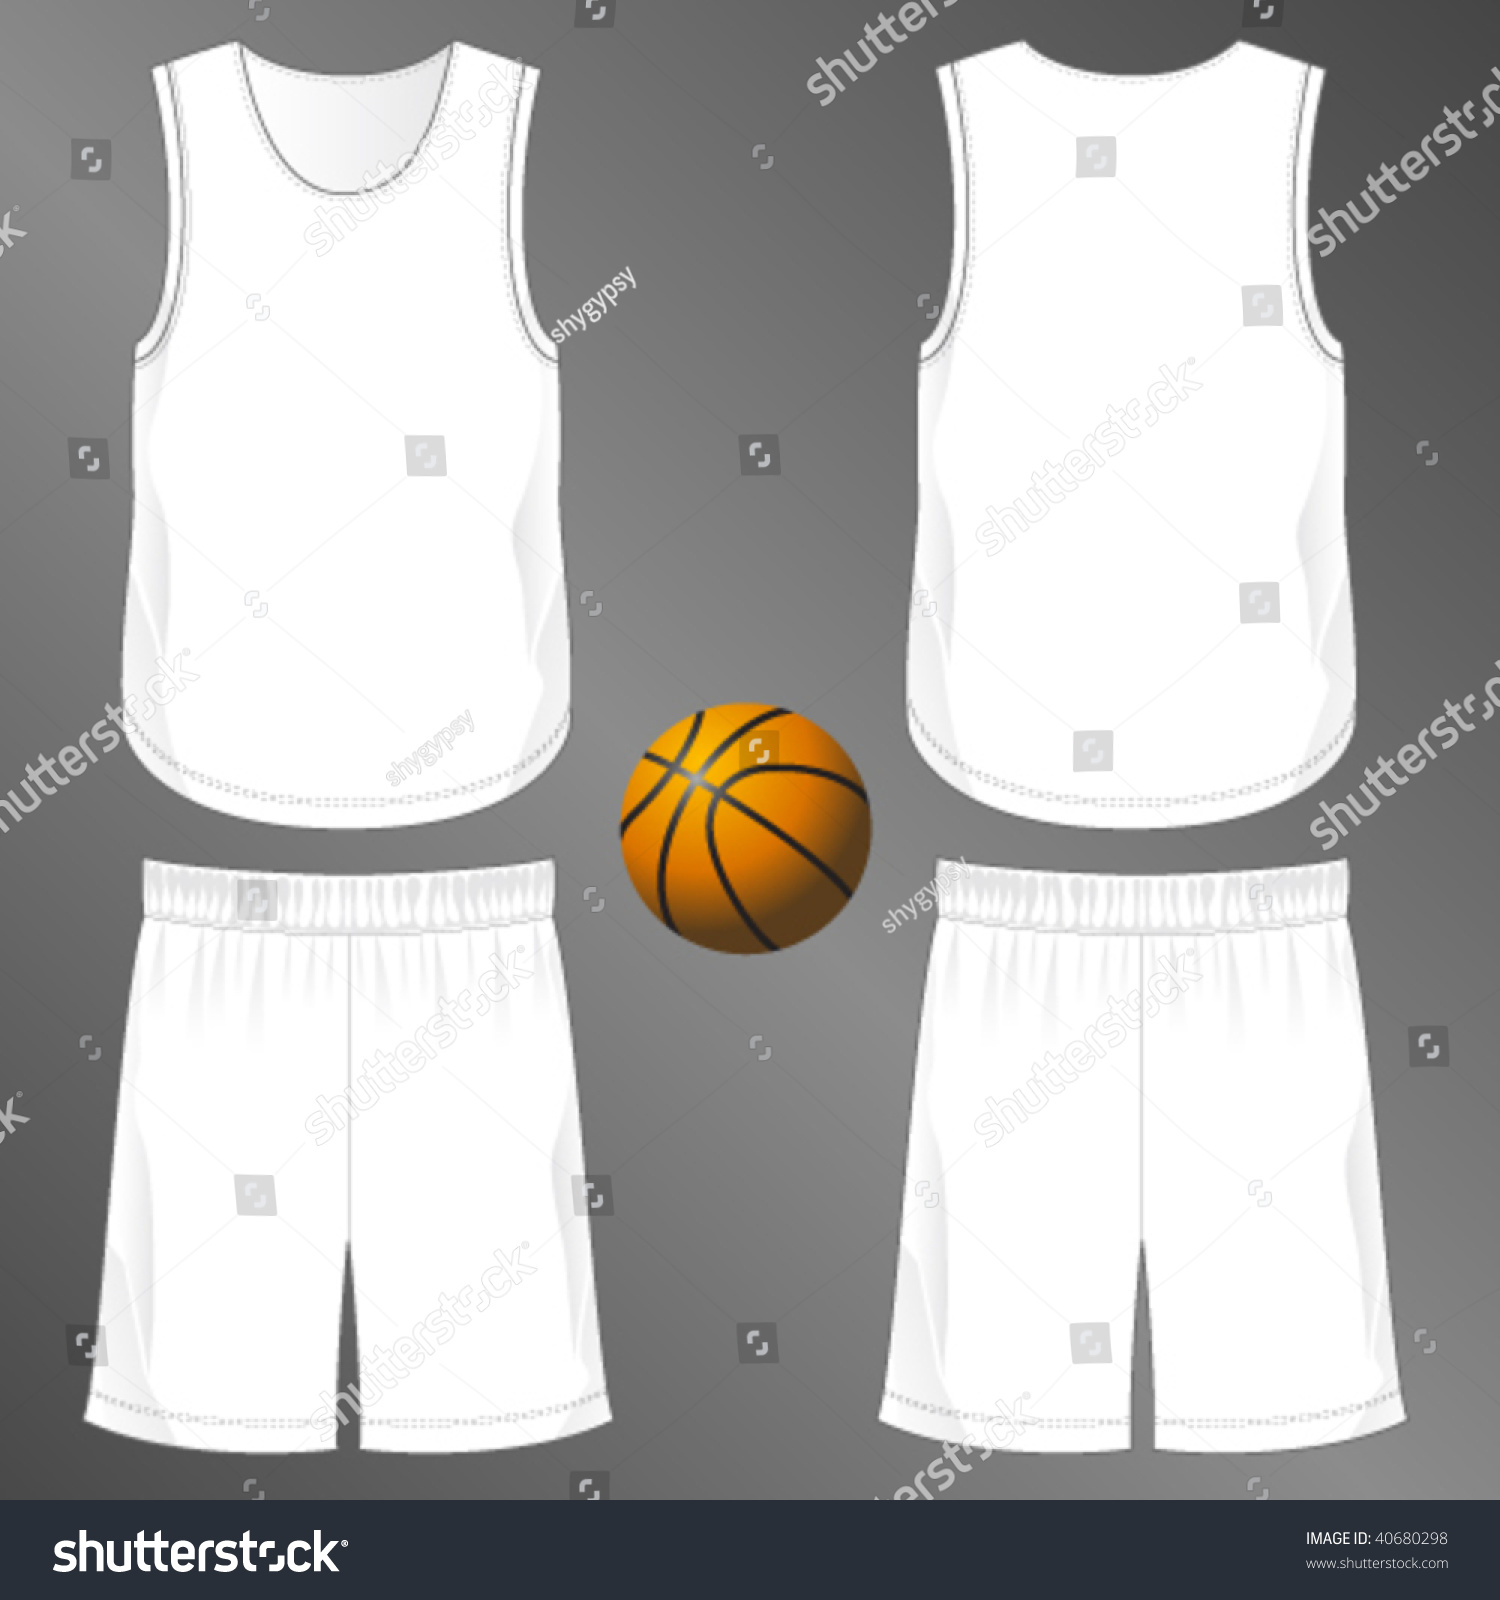 Sports Series Realistic Team Basketball Uniform Stock Vector With Blank Basketball Uniform Template